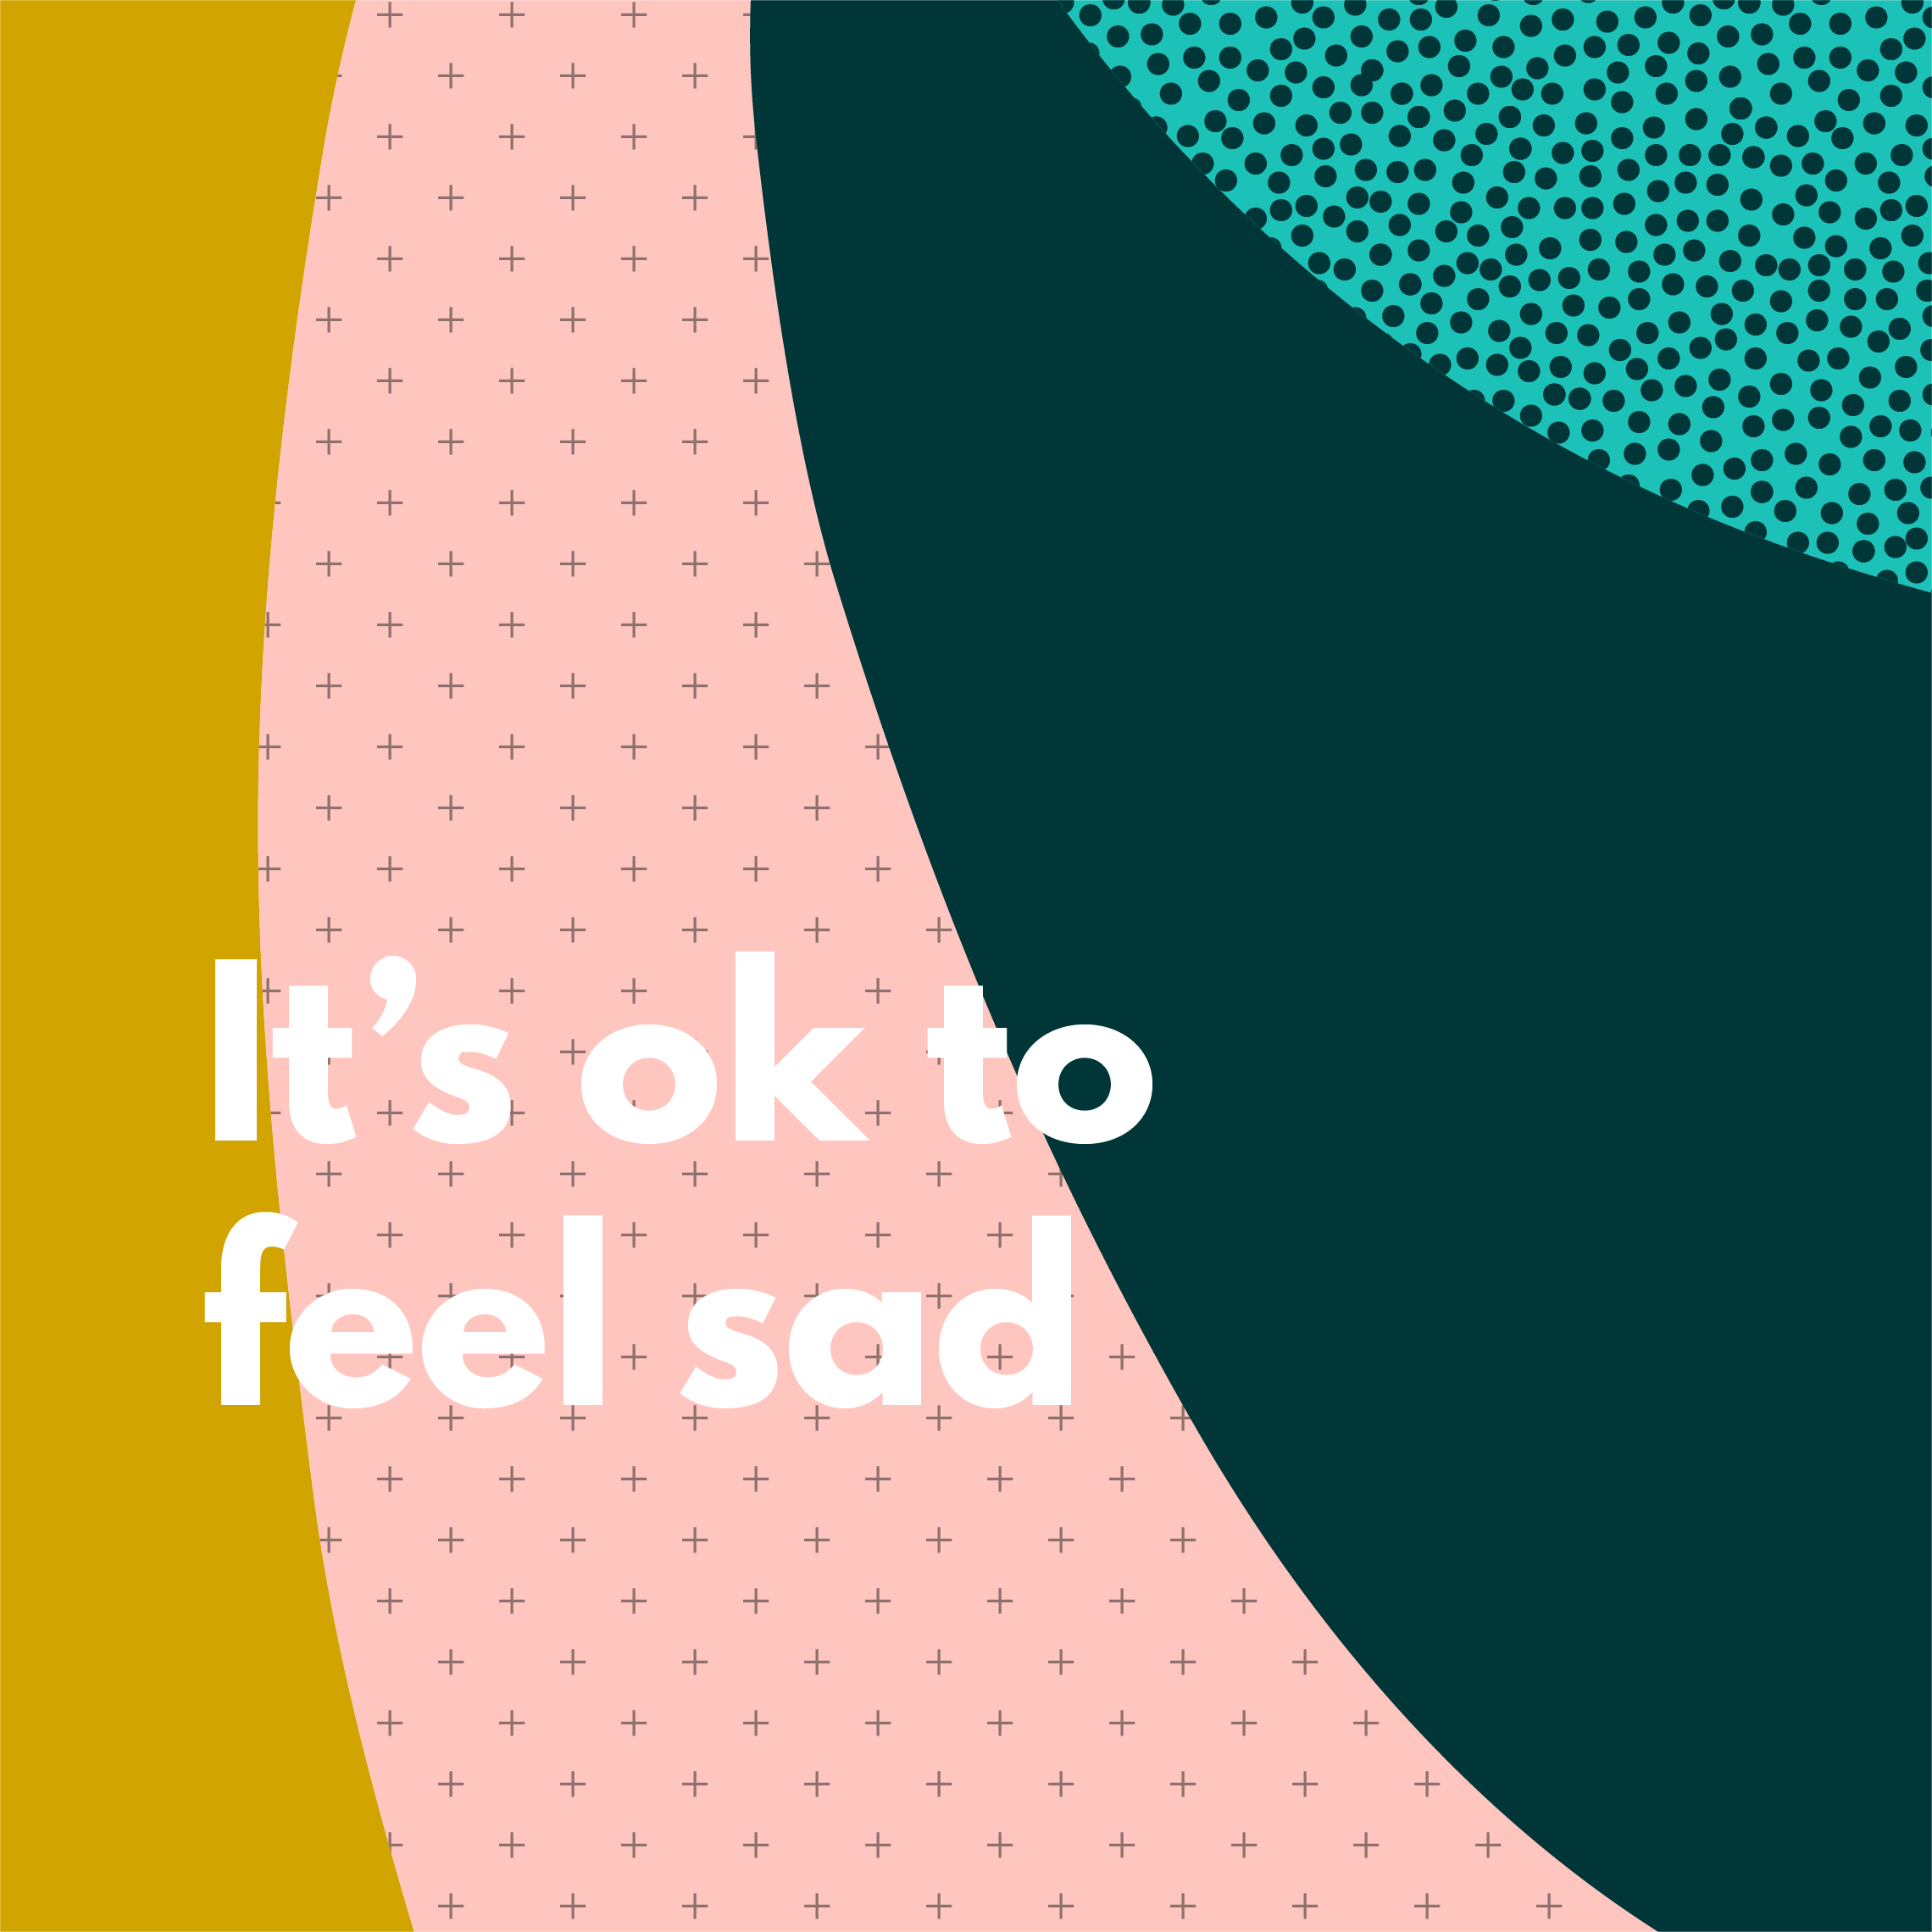 It's ok to feel sad